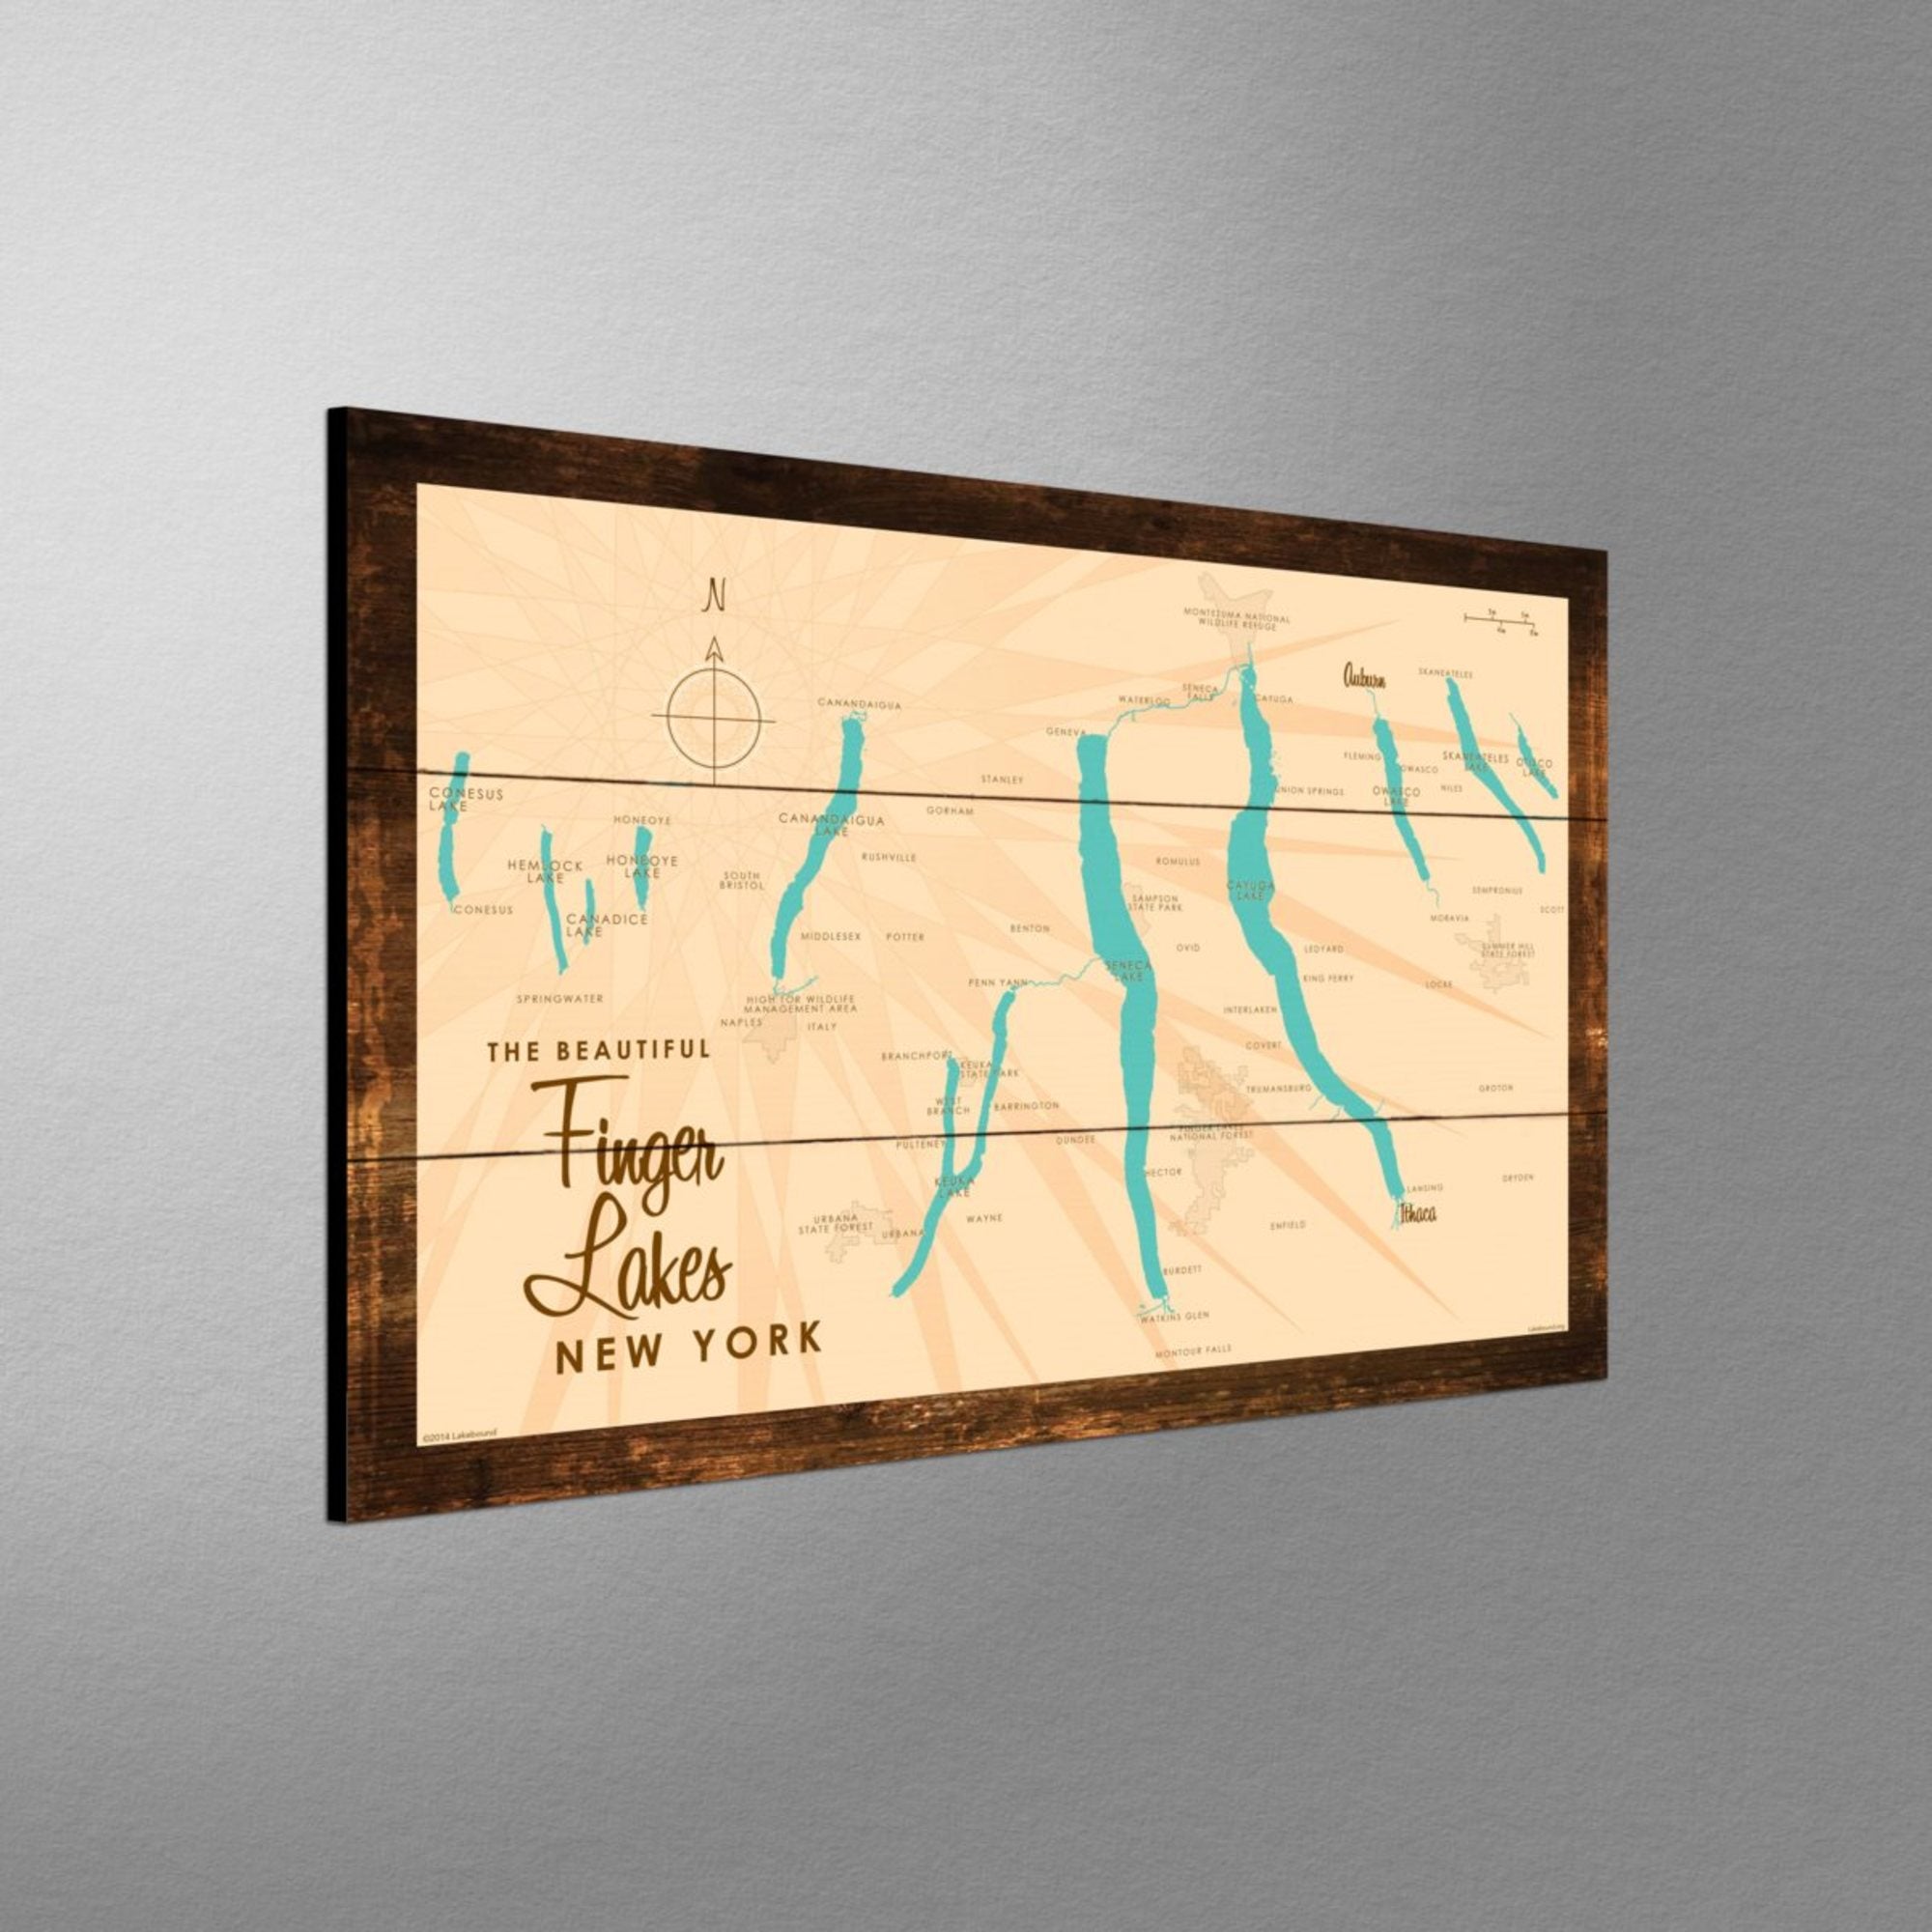 Finger Lakes New York, Rustic Wood Sign Map Art